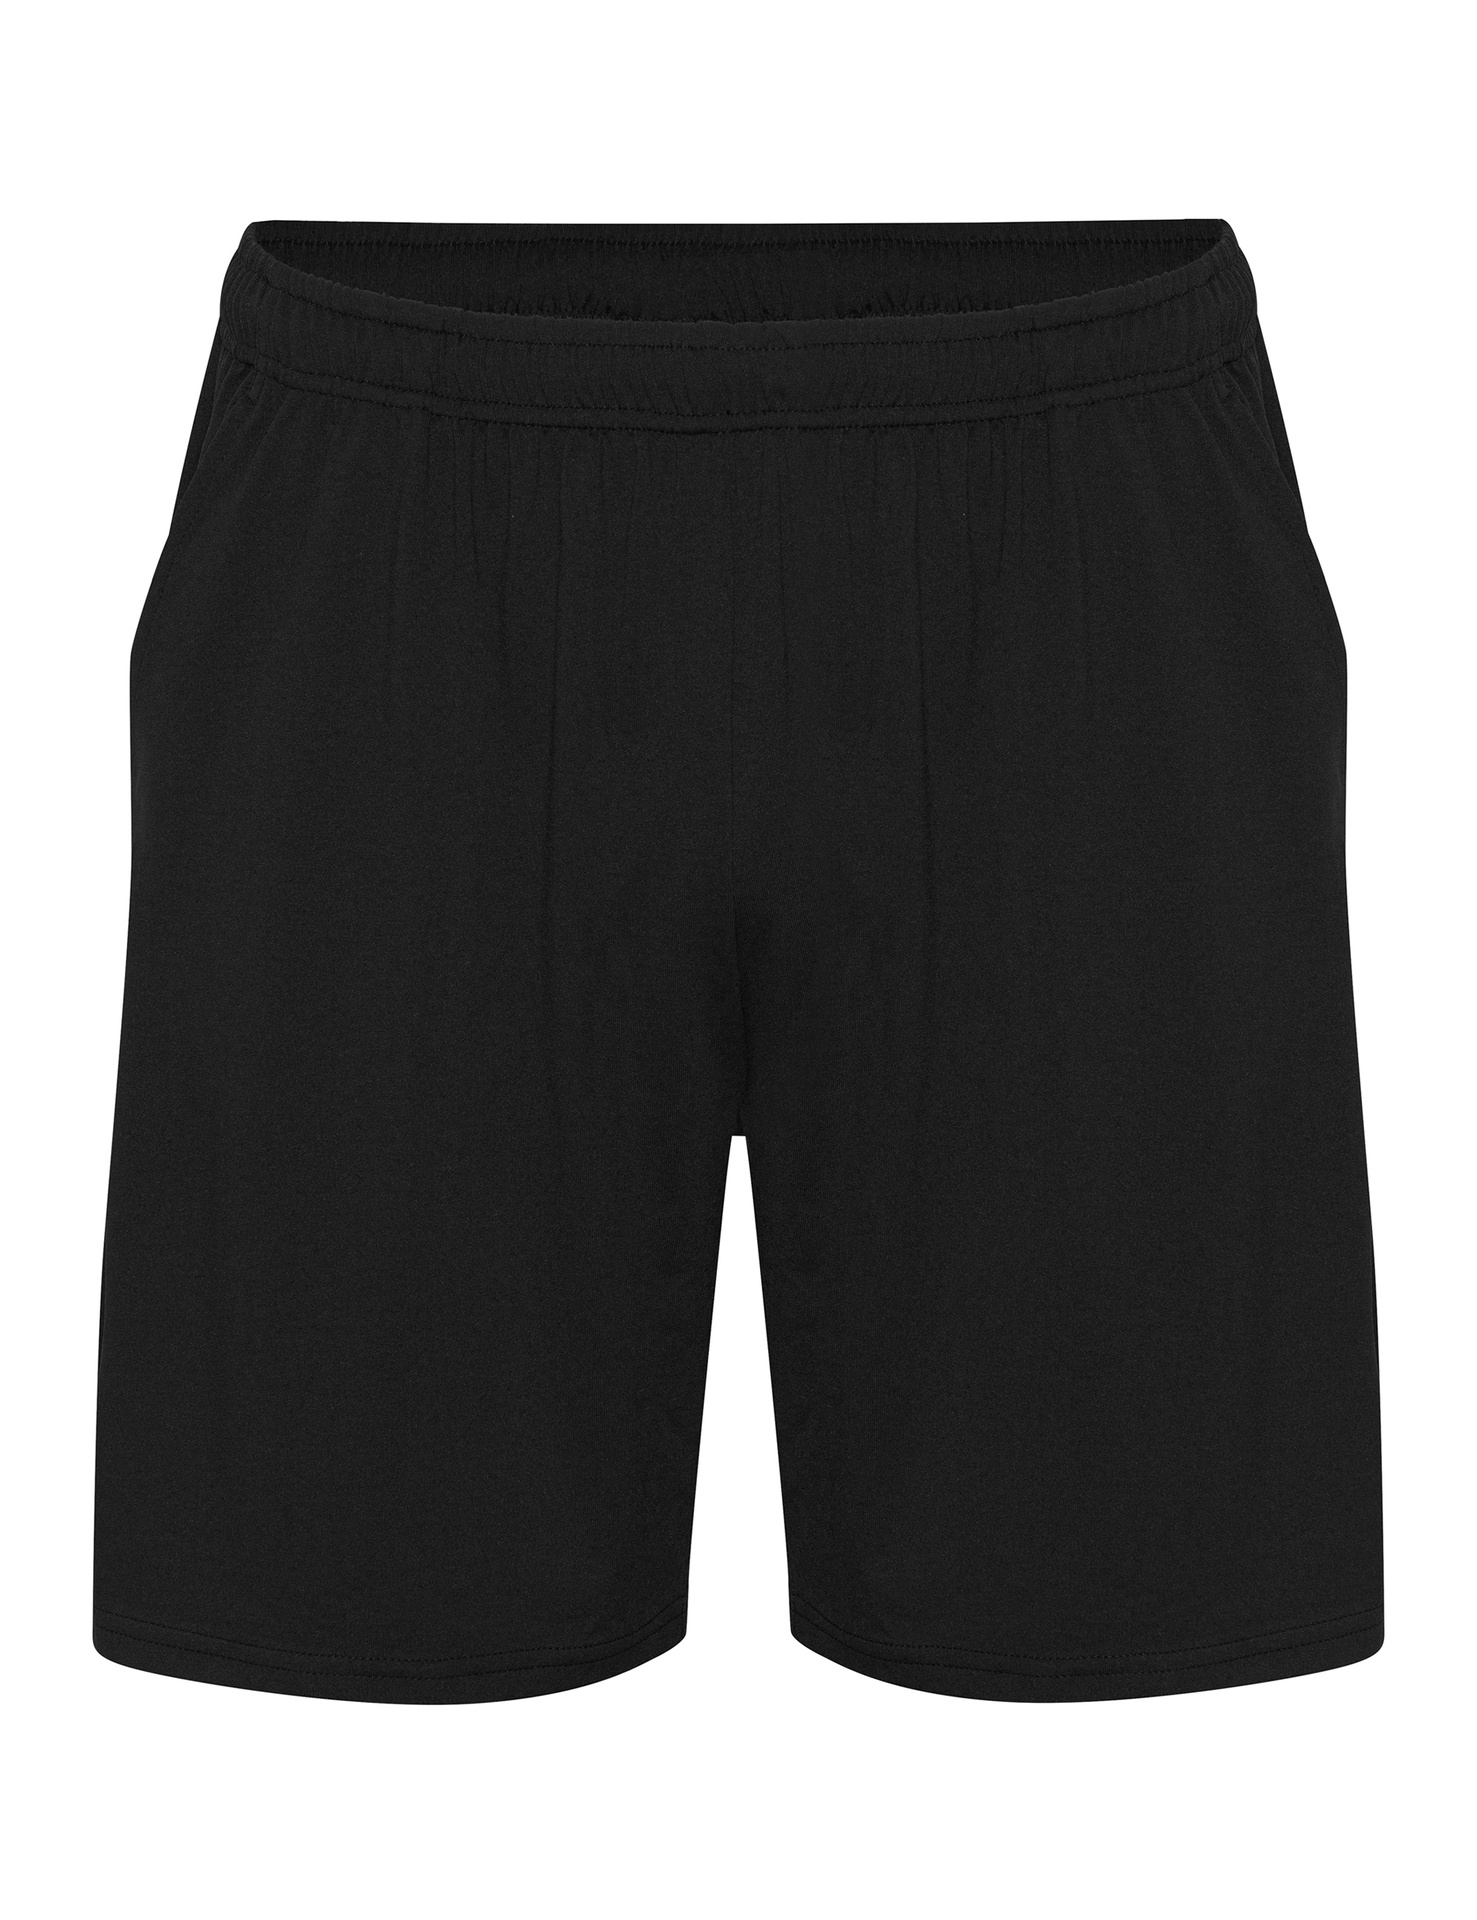 [PR/03859] Unisex Recycled Performance Shorts (Black 03, L)